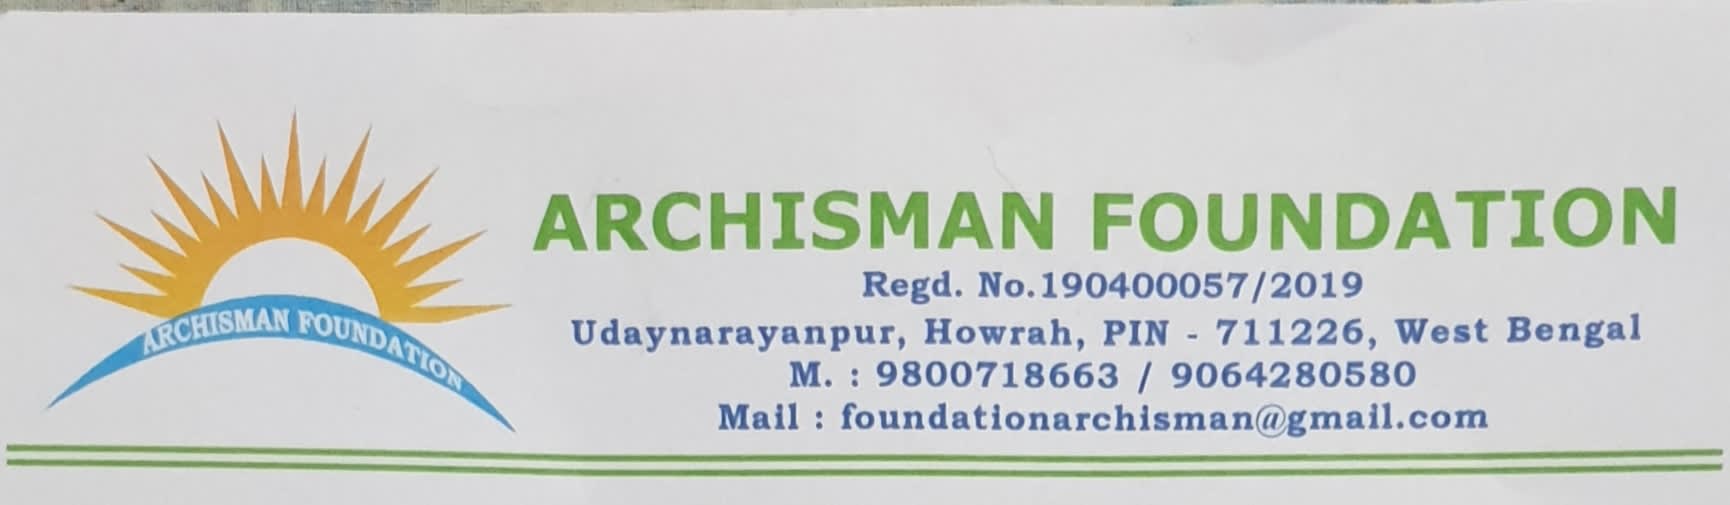 Archisman Foundation